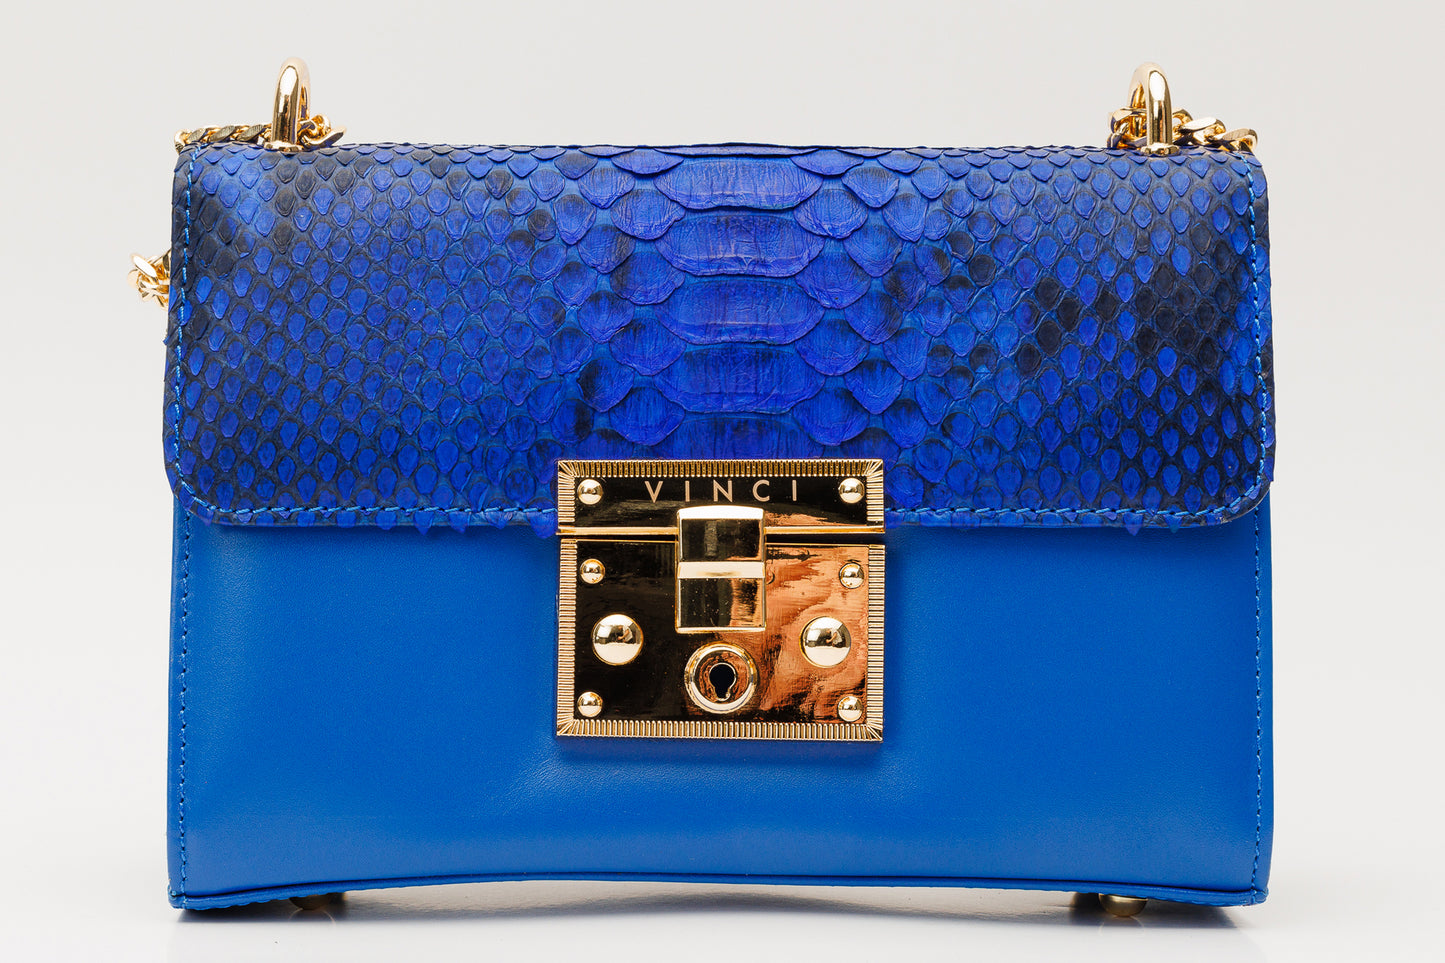 The Toskana Sax Blue Pythn Leather Handbag